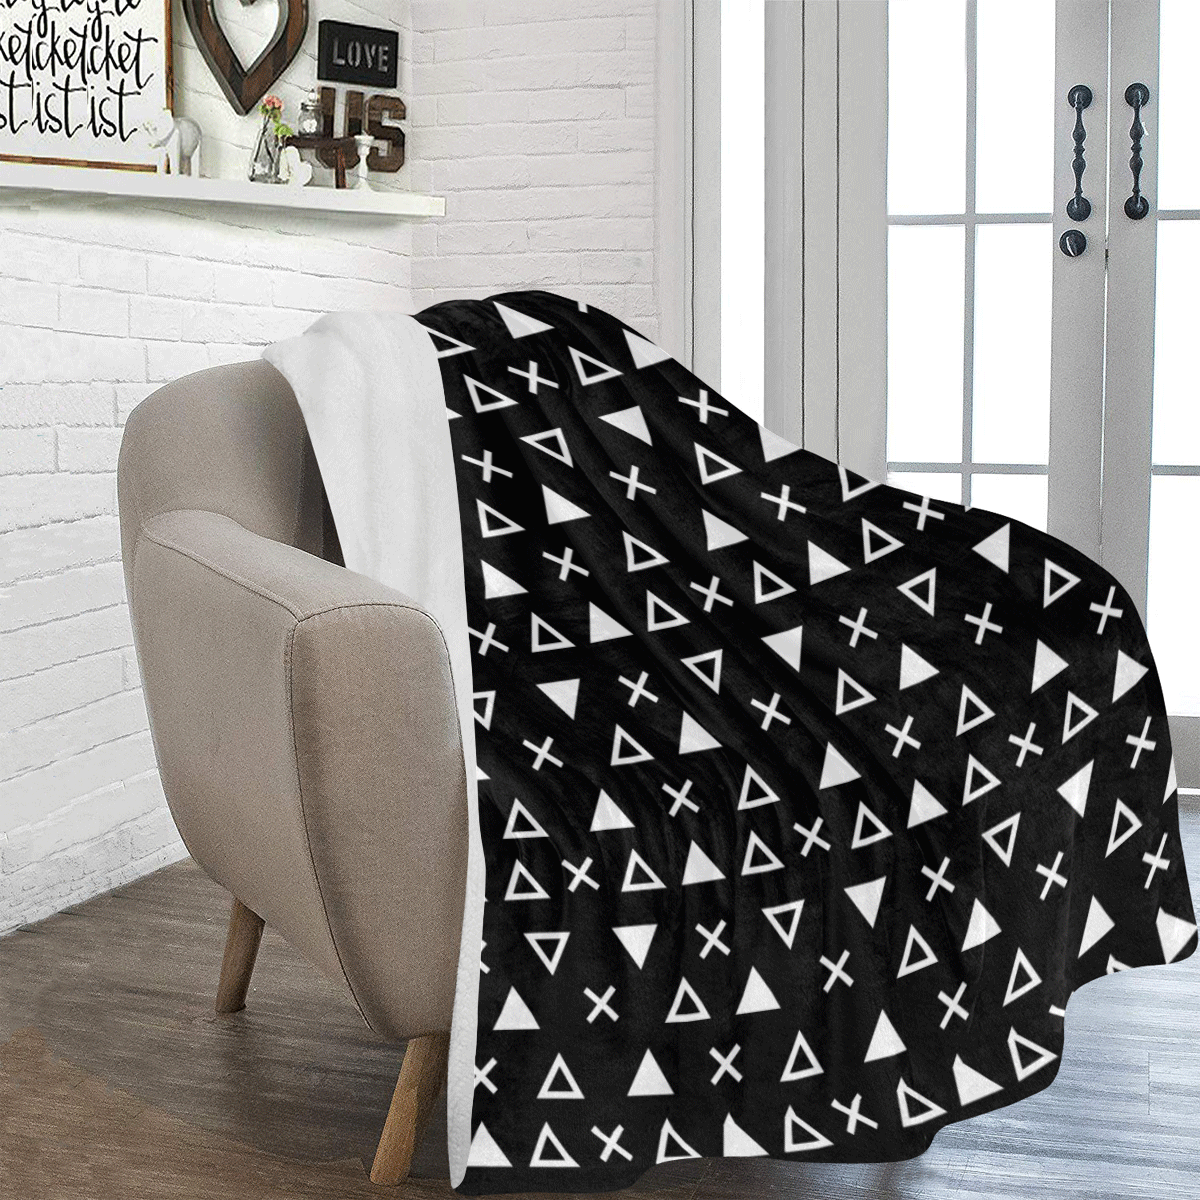 Geo Line Triangle Ultra-Soft Micro Fleece Blanket 60"x80"